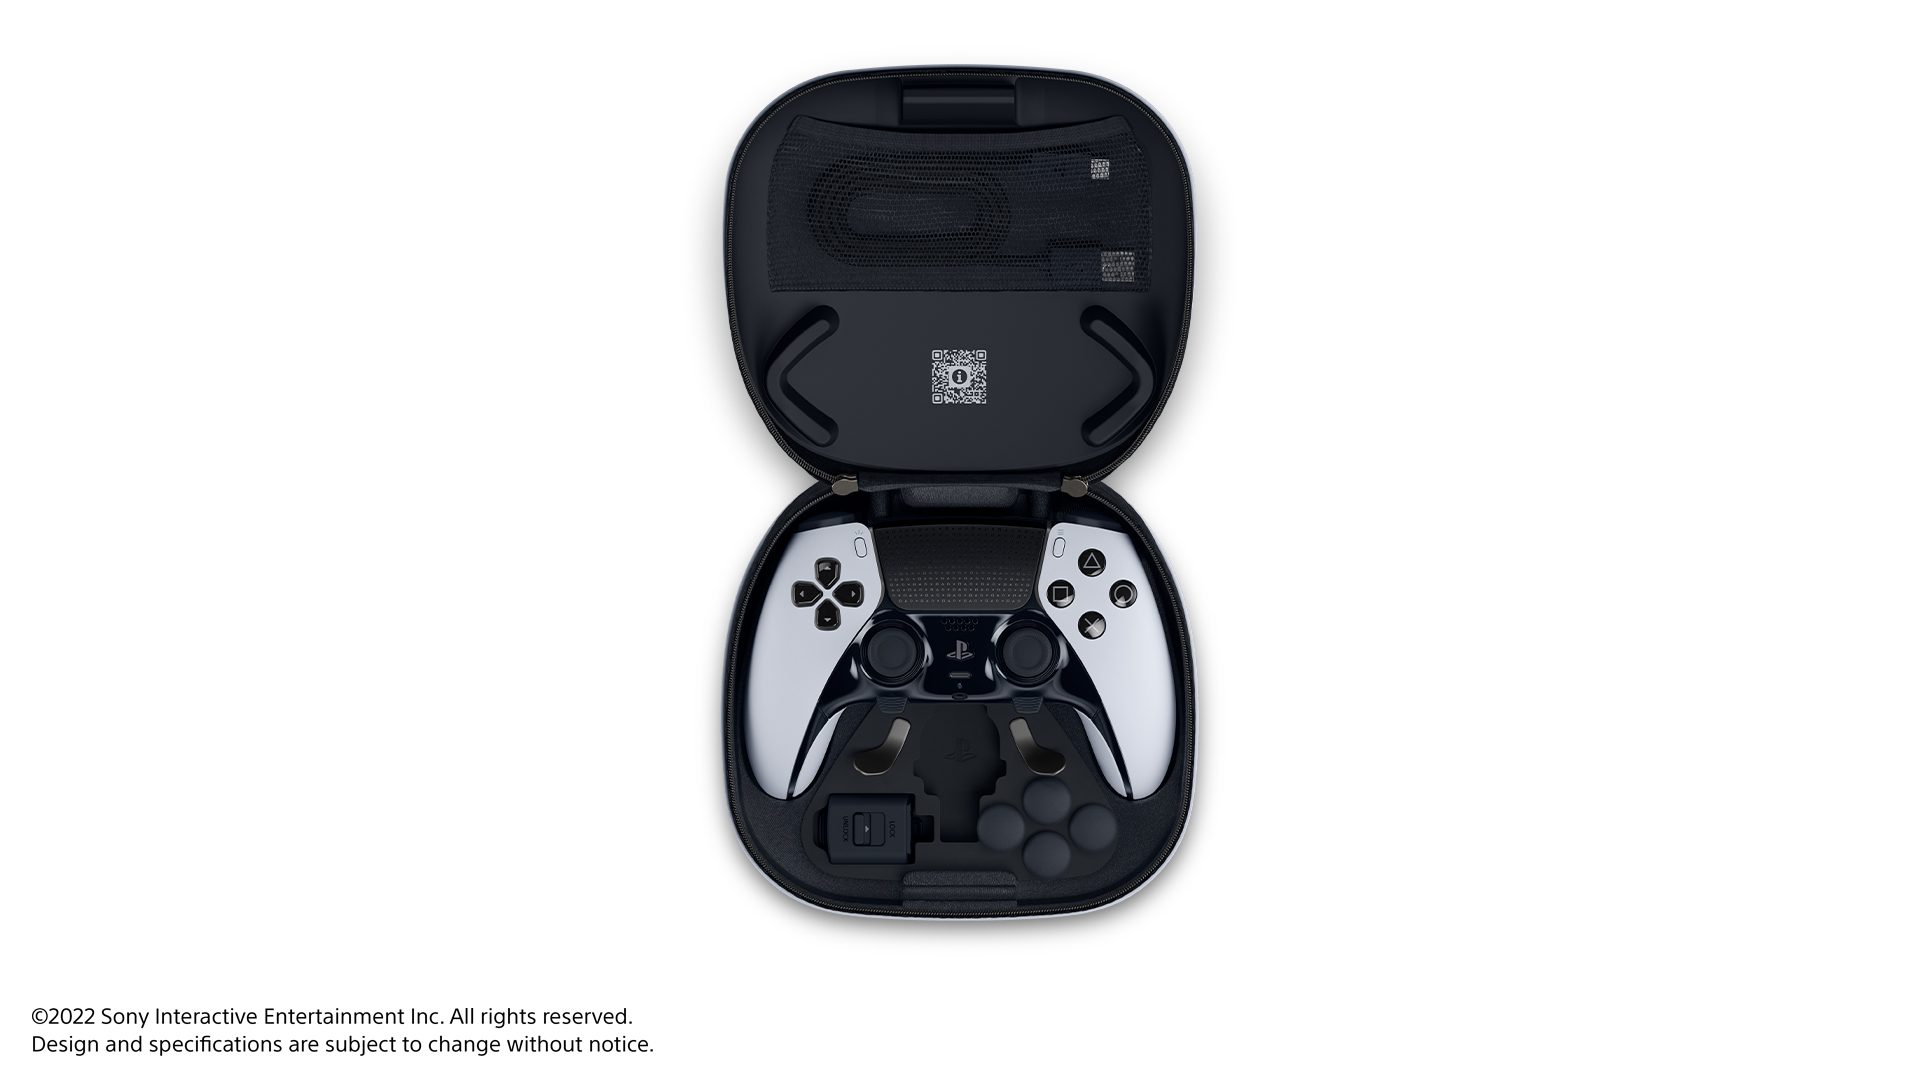 DualSense Edge: Así se diseñó el mando profesional de PS5